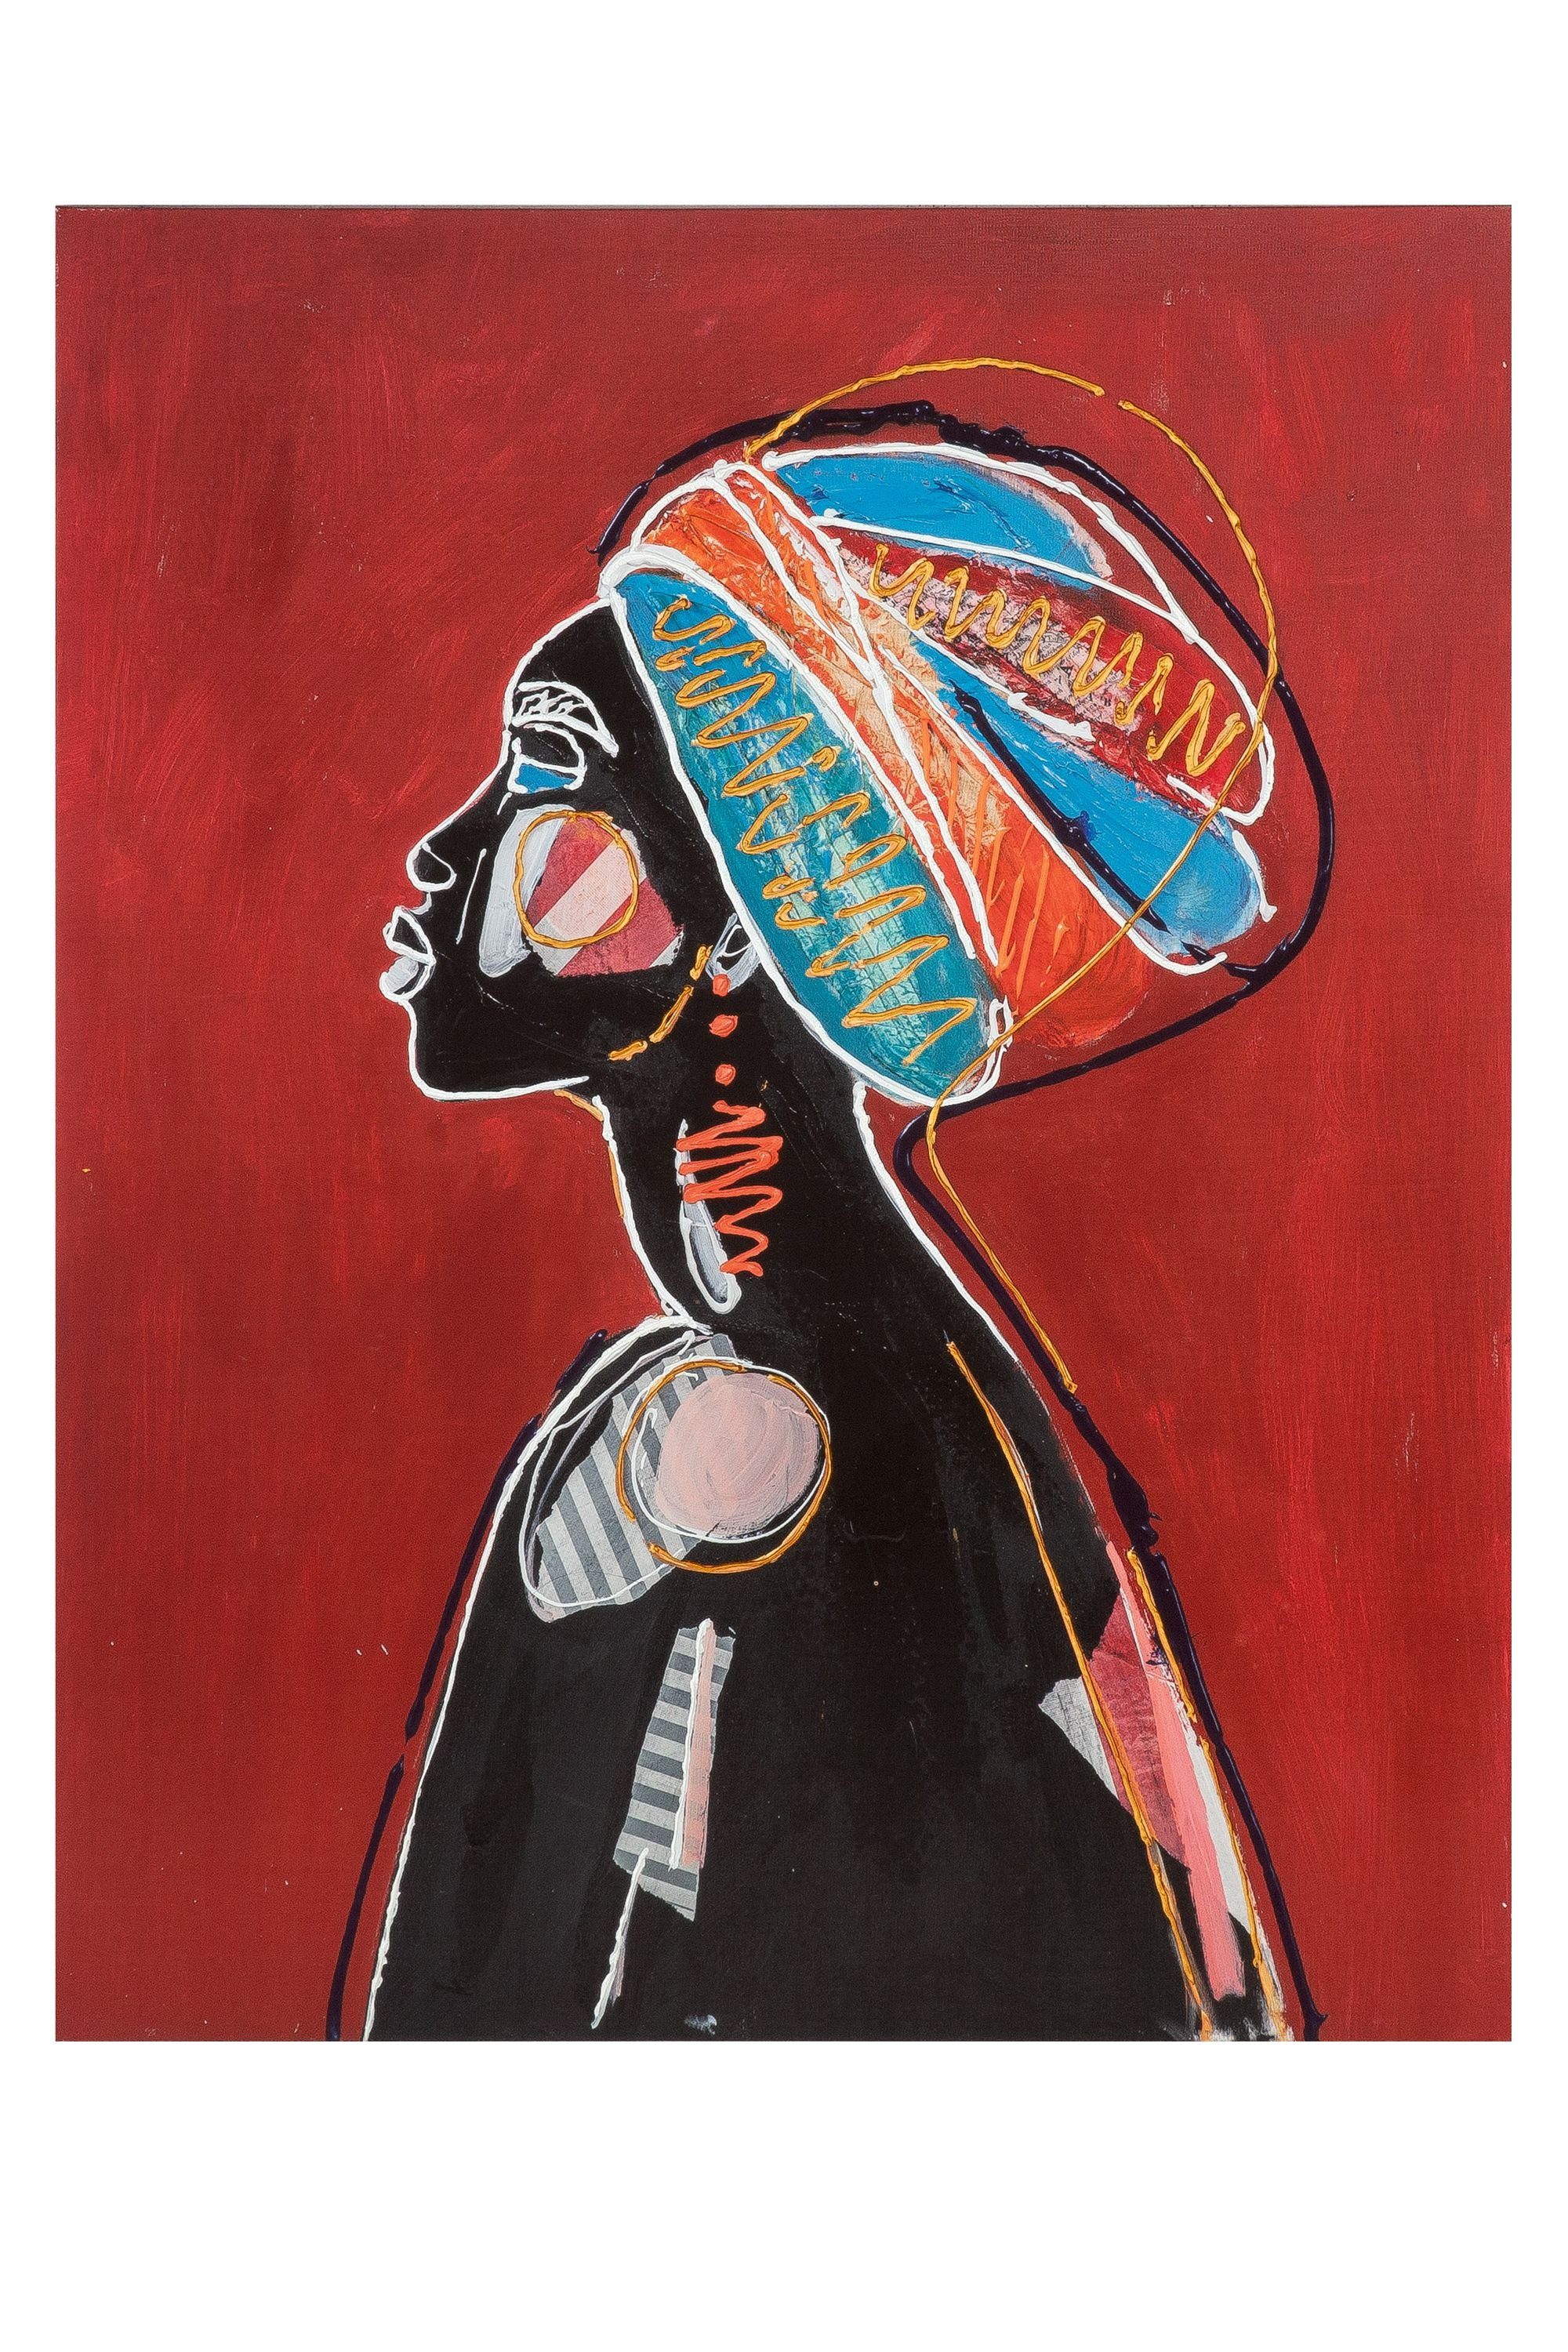 GILDE Bild GILDE Bild Afrikanische Kopfbedeckung - bordeauxrot - H. 100cm x B. 80cm